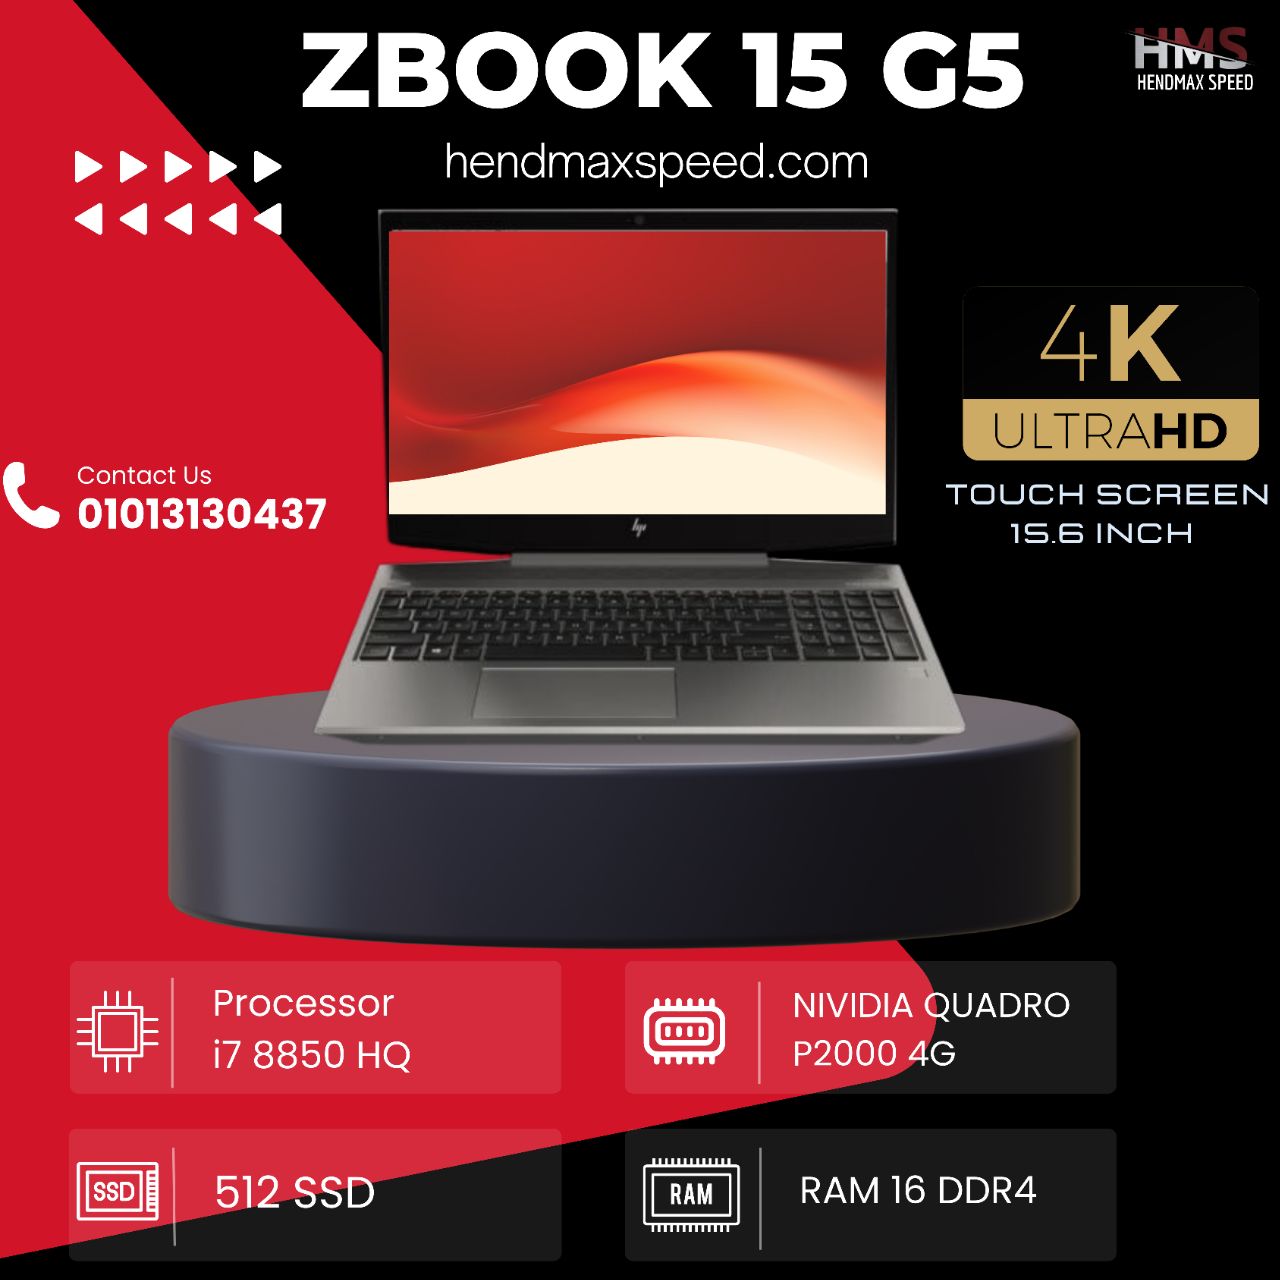 Hp Zbook 15 G5 i7 8850 4k touch screen NVIDIA p2000